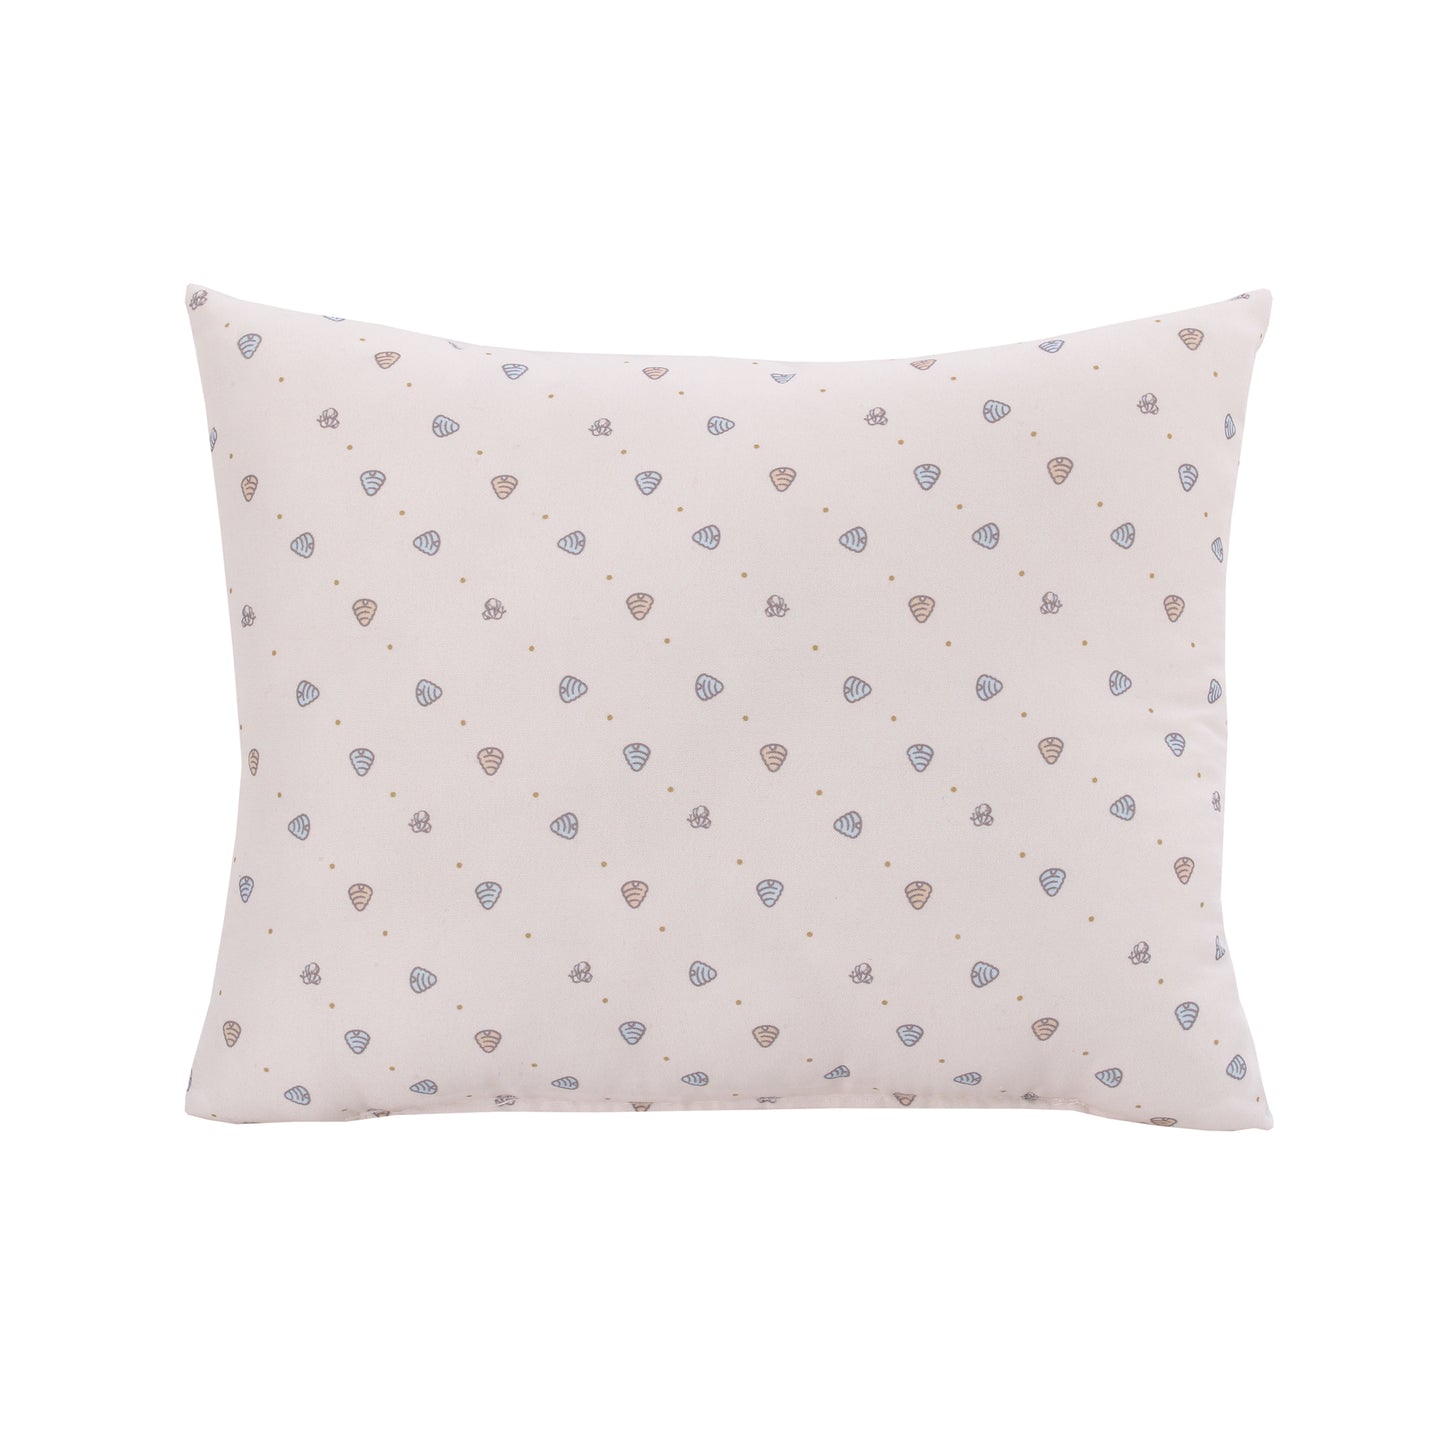 Disney Winnie the Pooh Decorative Keepsake Pillow – Personalized Birth Pillow